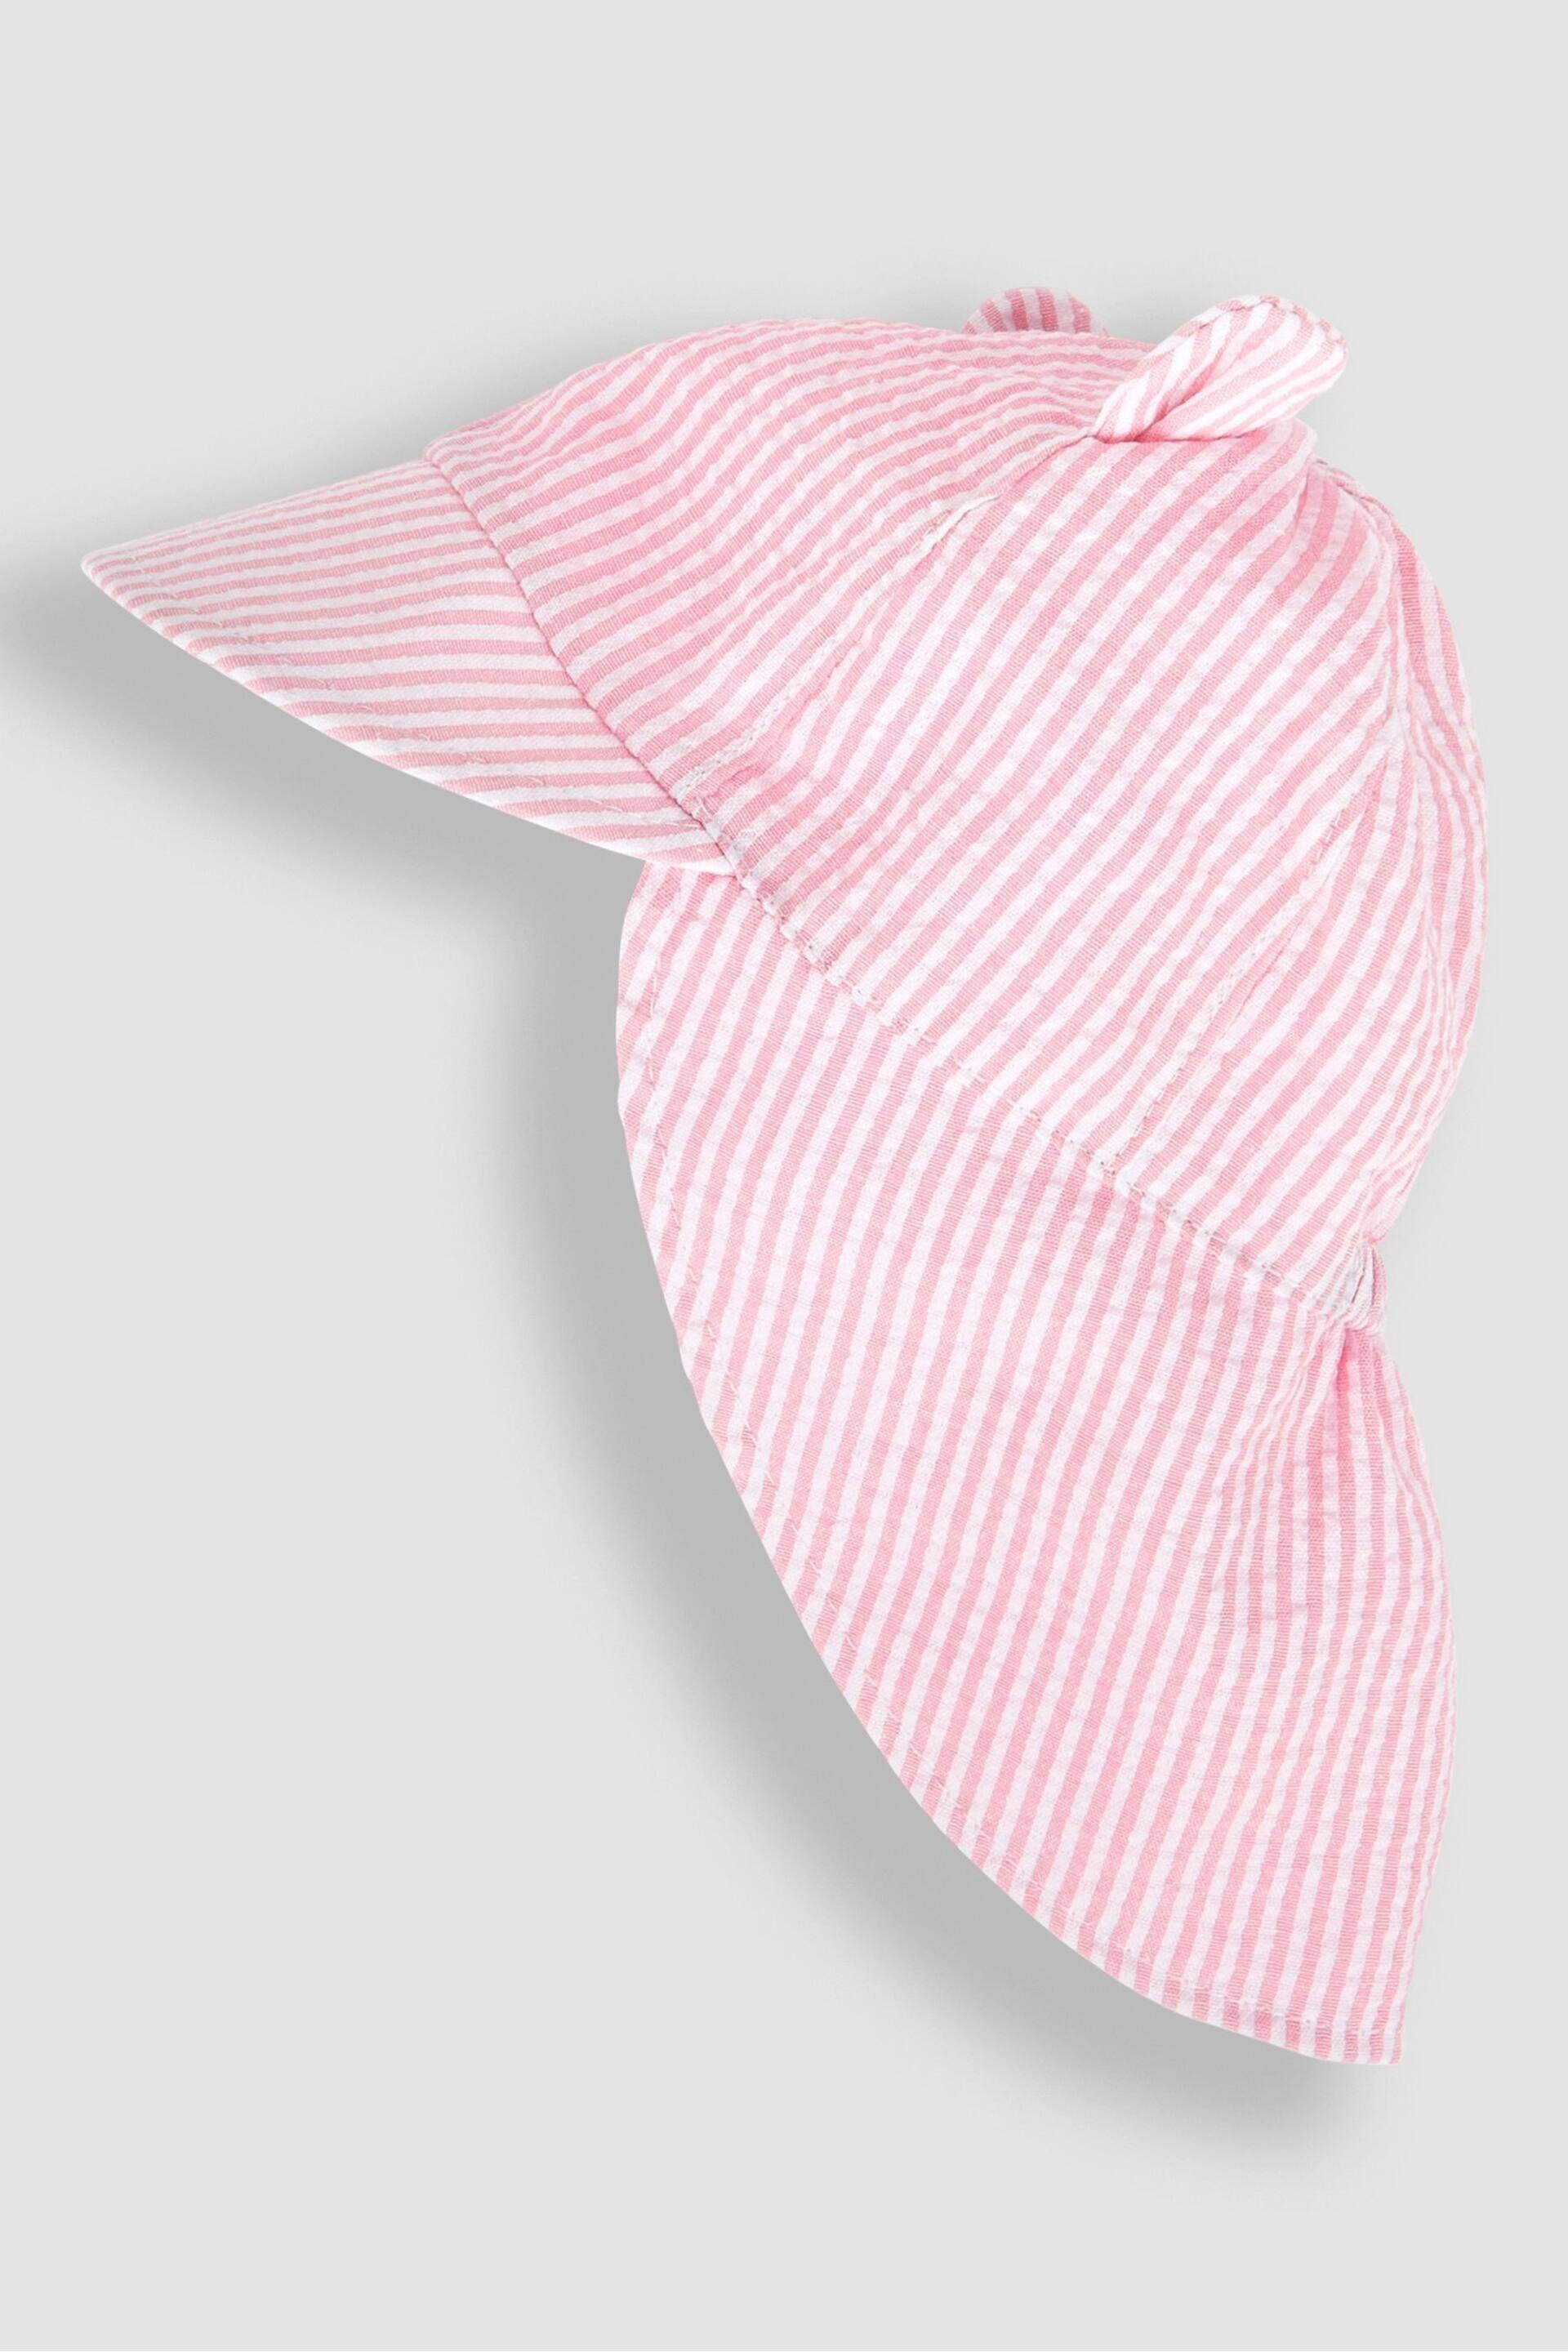 JoJo Maman Bébé Pink Stripe Legionnaire Cap - Image 1 of 3